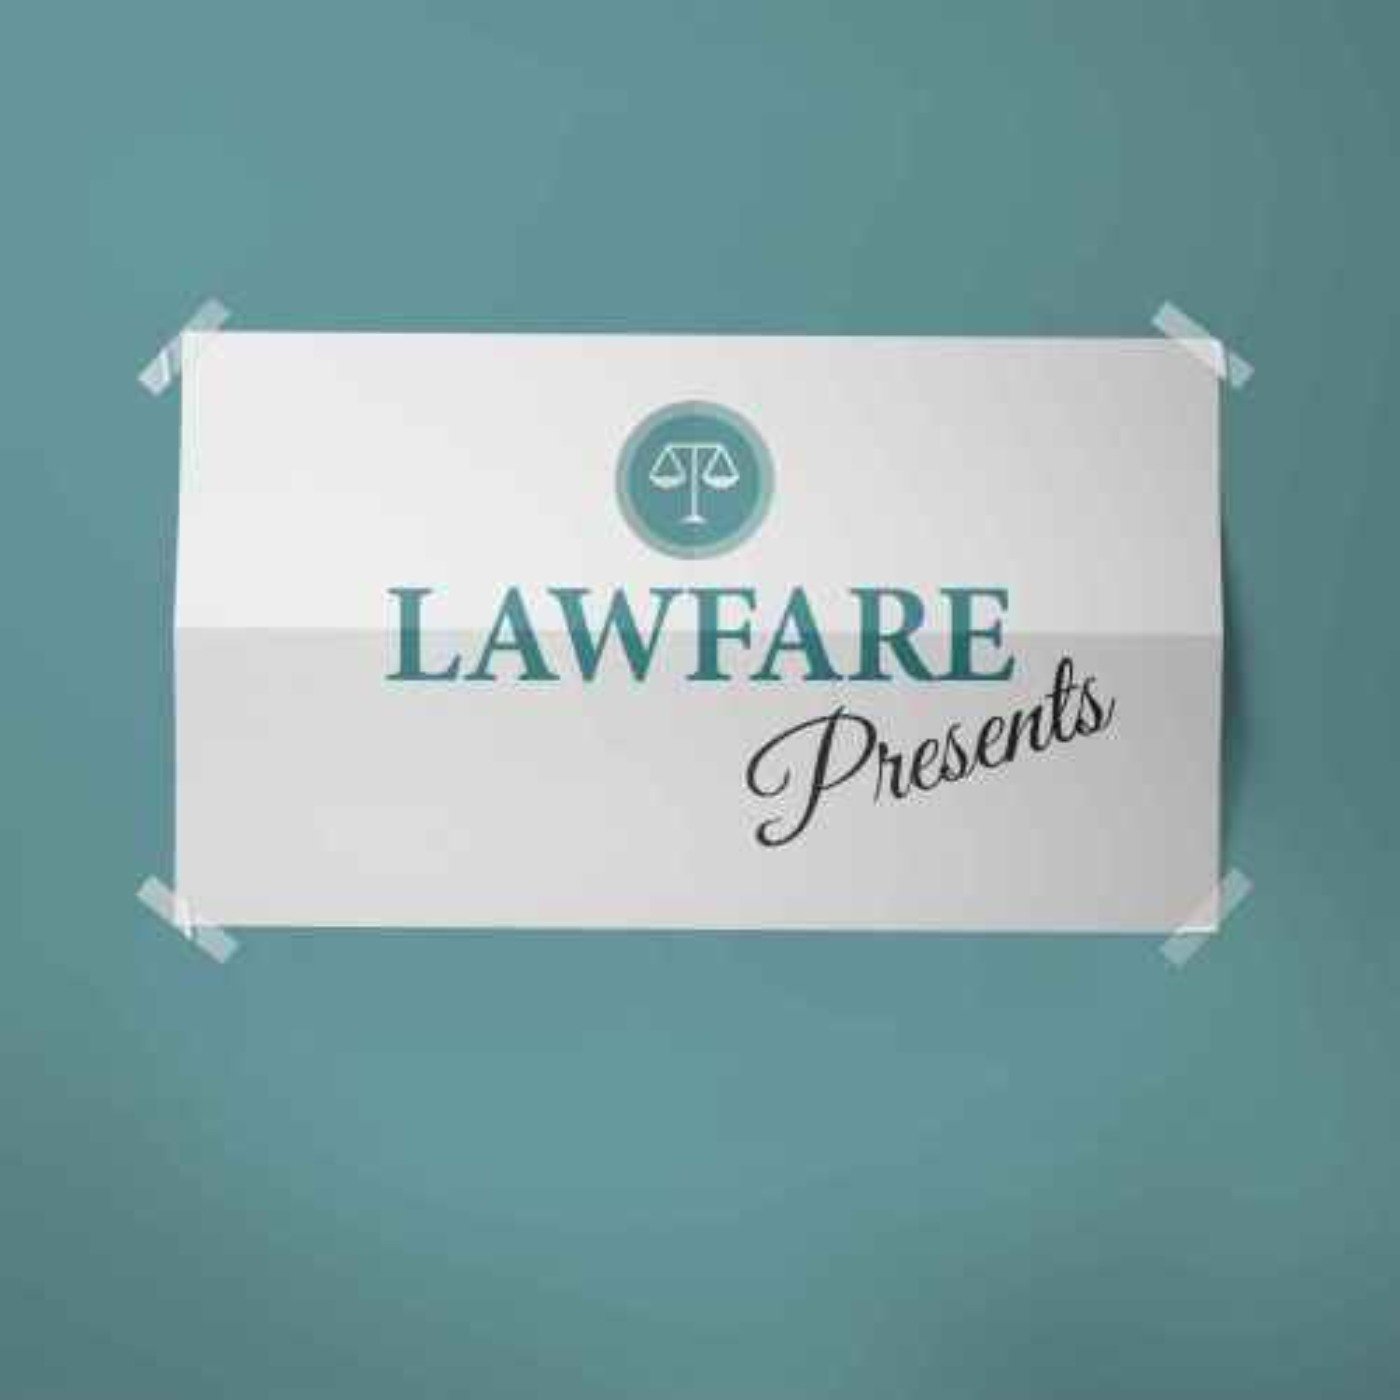 Lawfare Presents: ALLIES